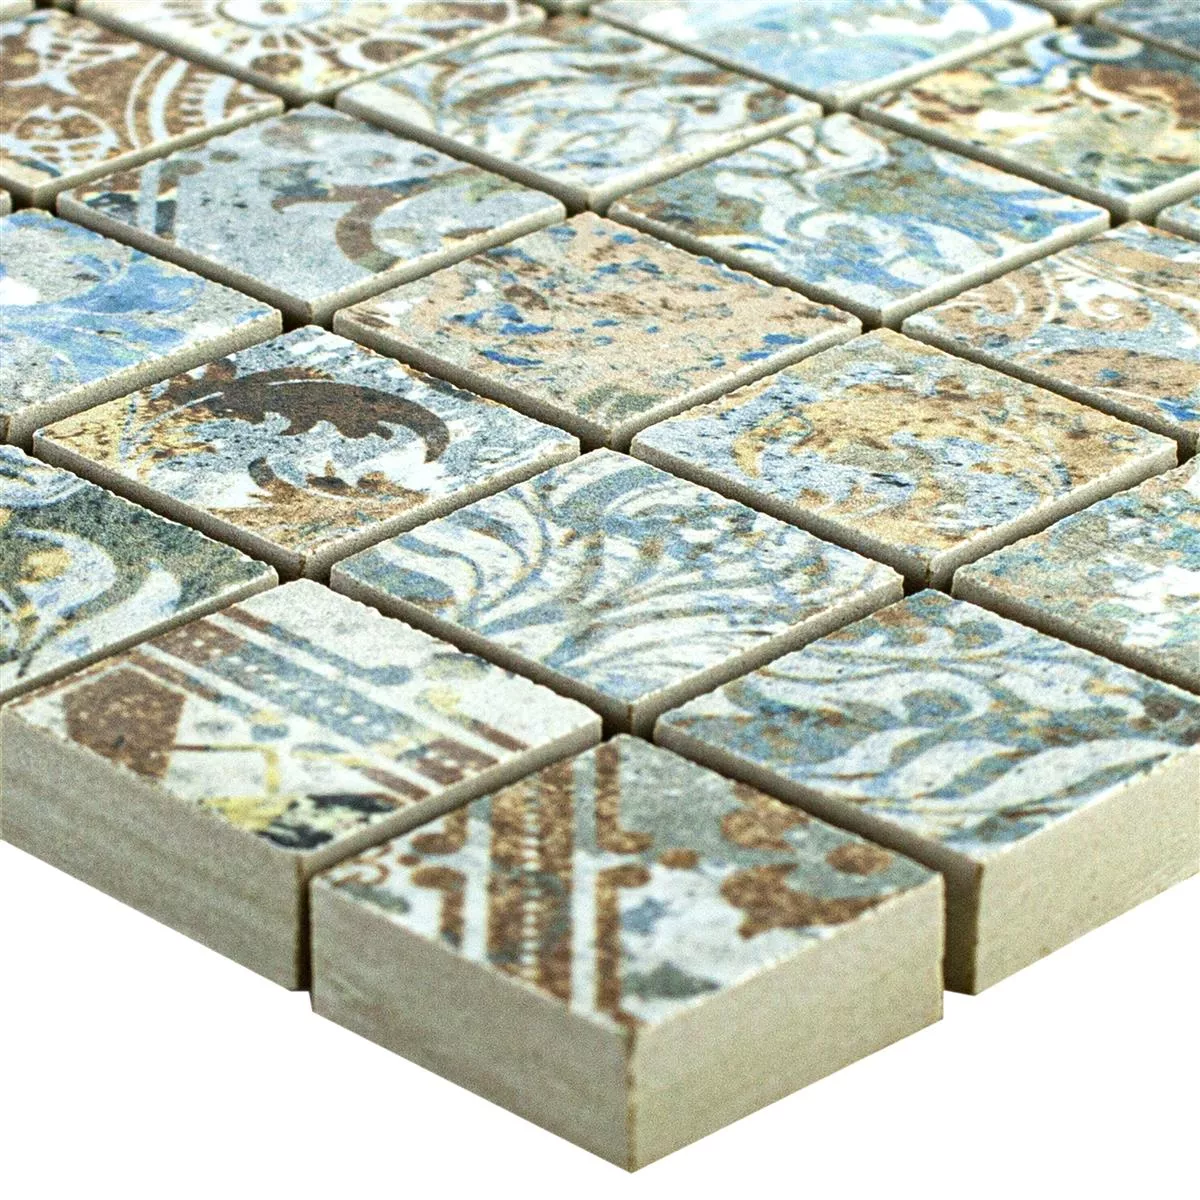 Sample Ceramic Mosaic Tiles Patchwork Colored